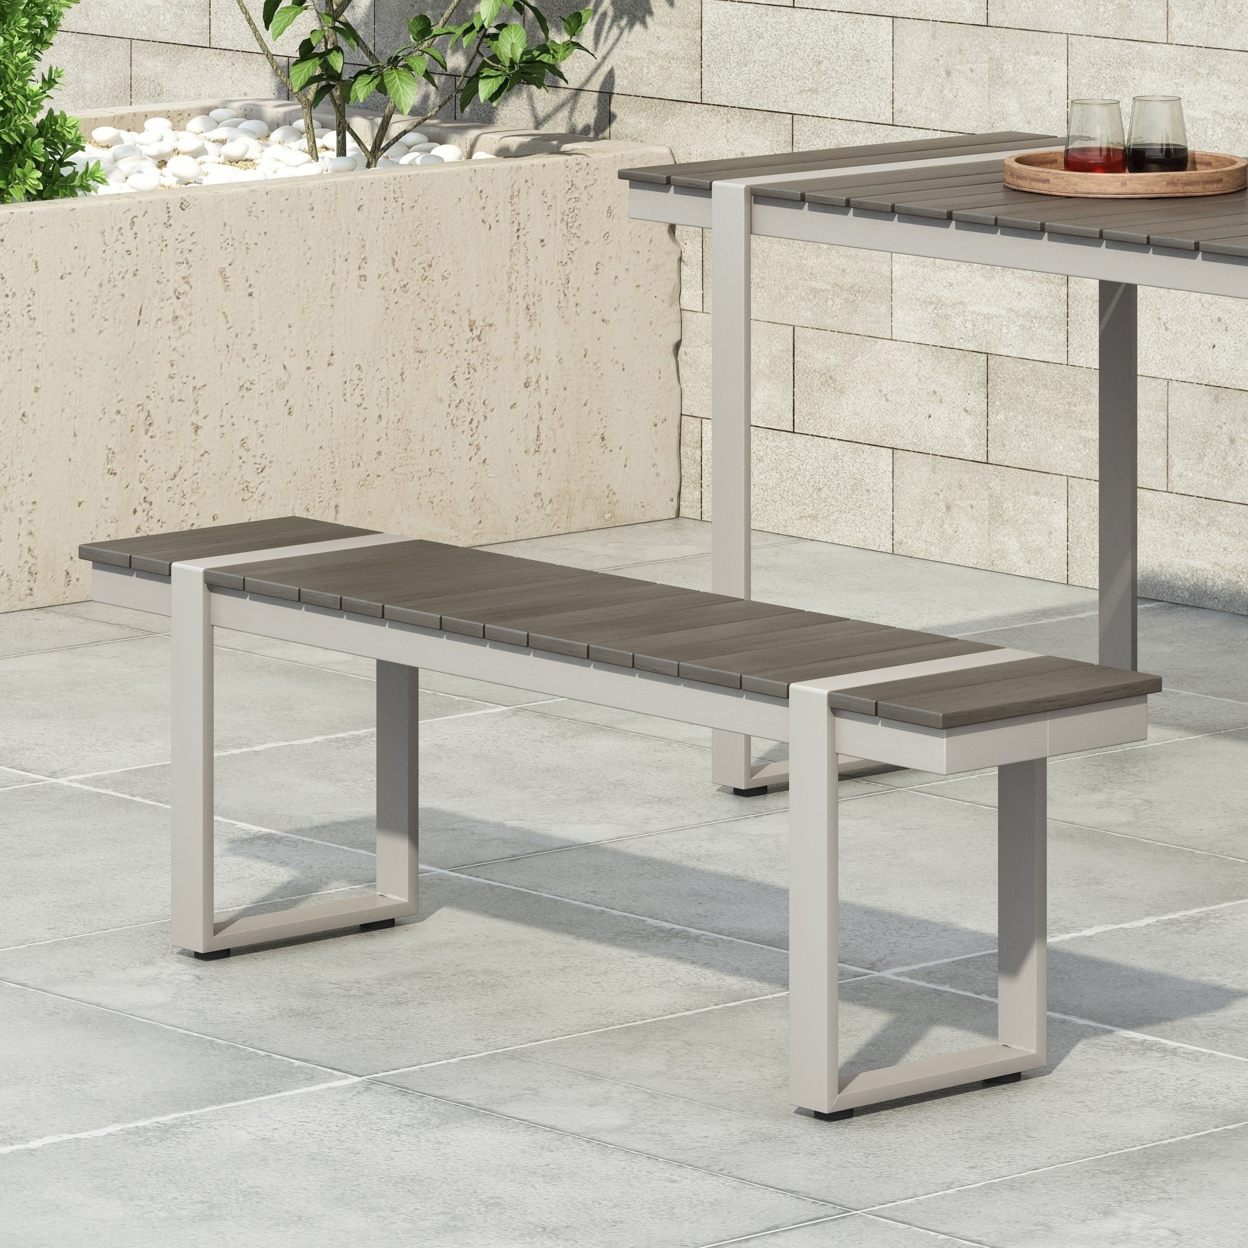 Mora Outdoor Aluminum Dining Bench - Gray/silver